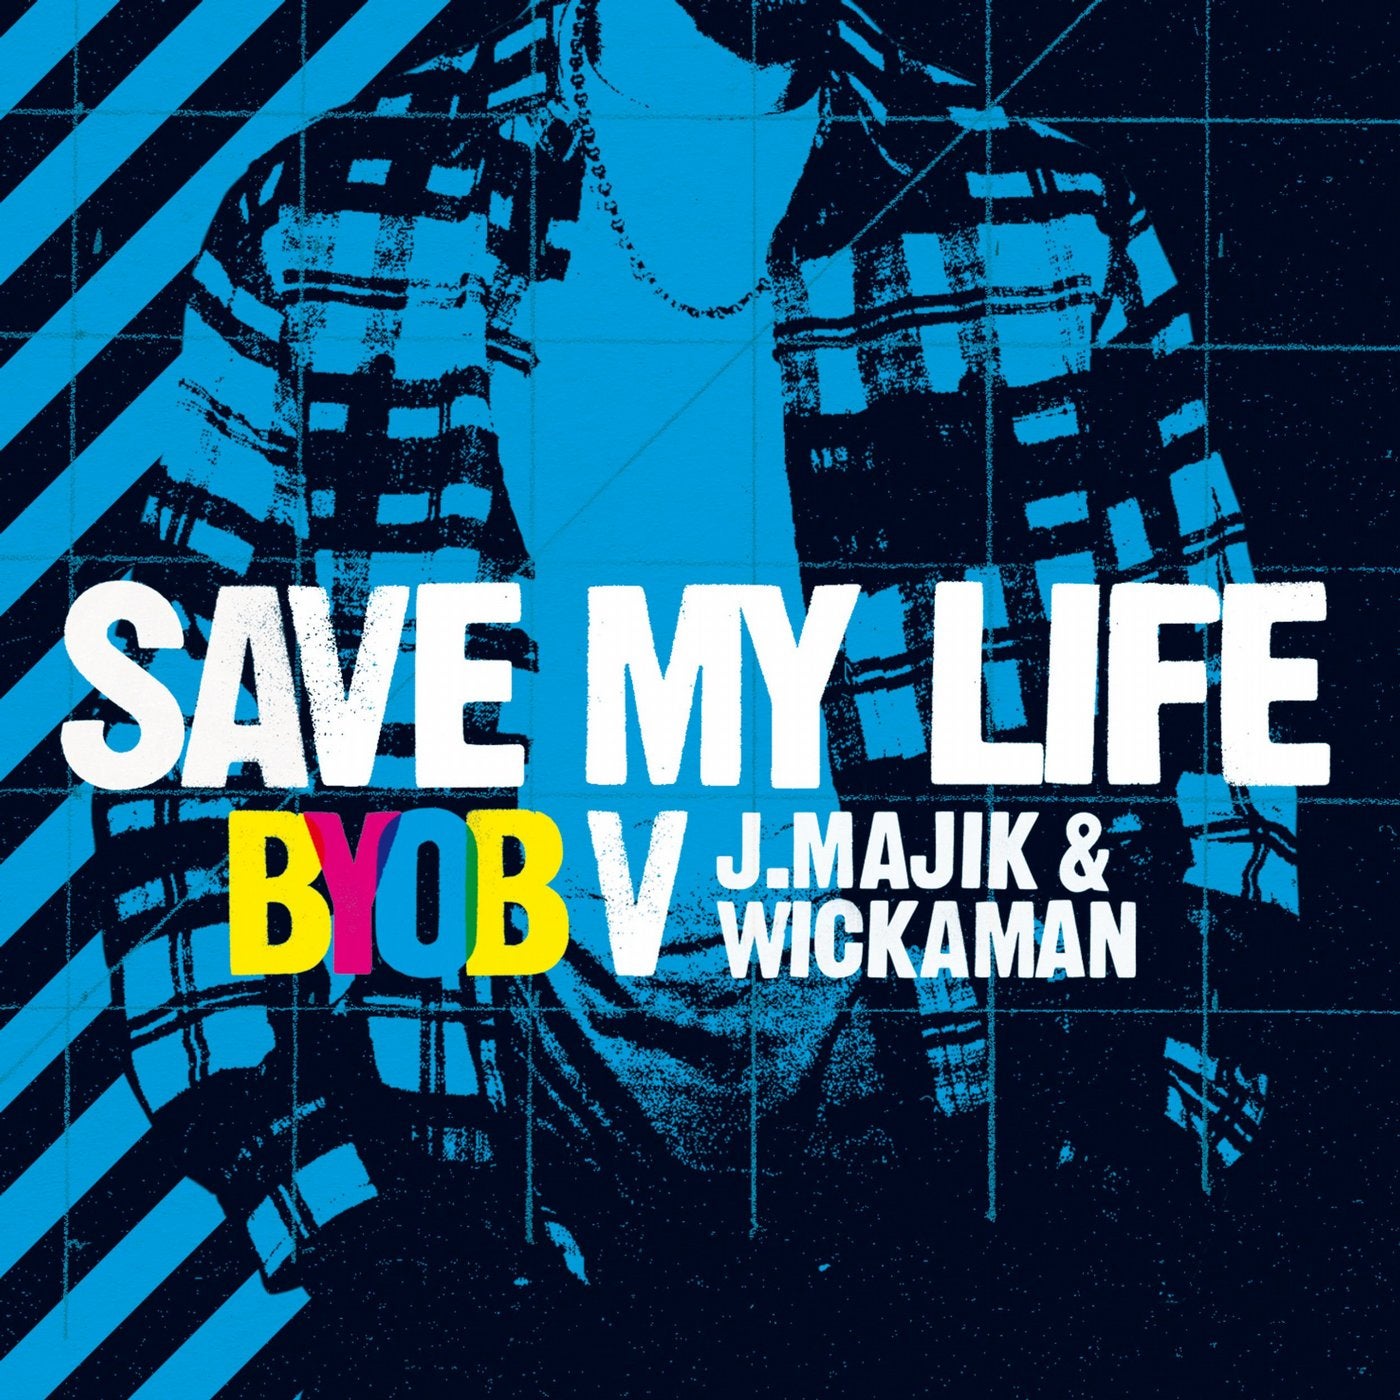 J Majik Wickaman. Save my Life. Пластинка j Majik Wickaman Remix. J Majik & Wickaman - Crazy World (Extended Mix). J my life